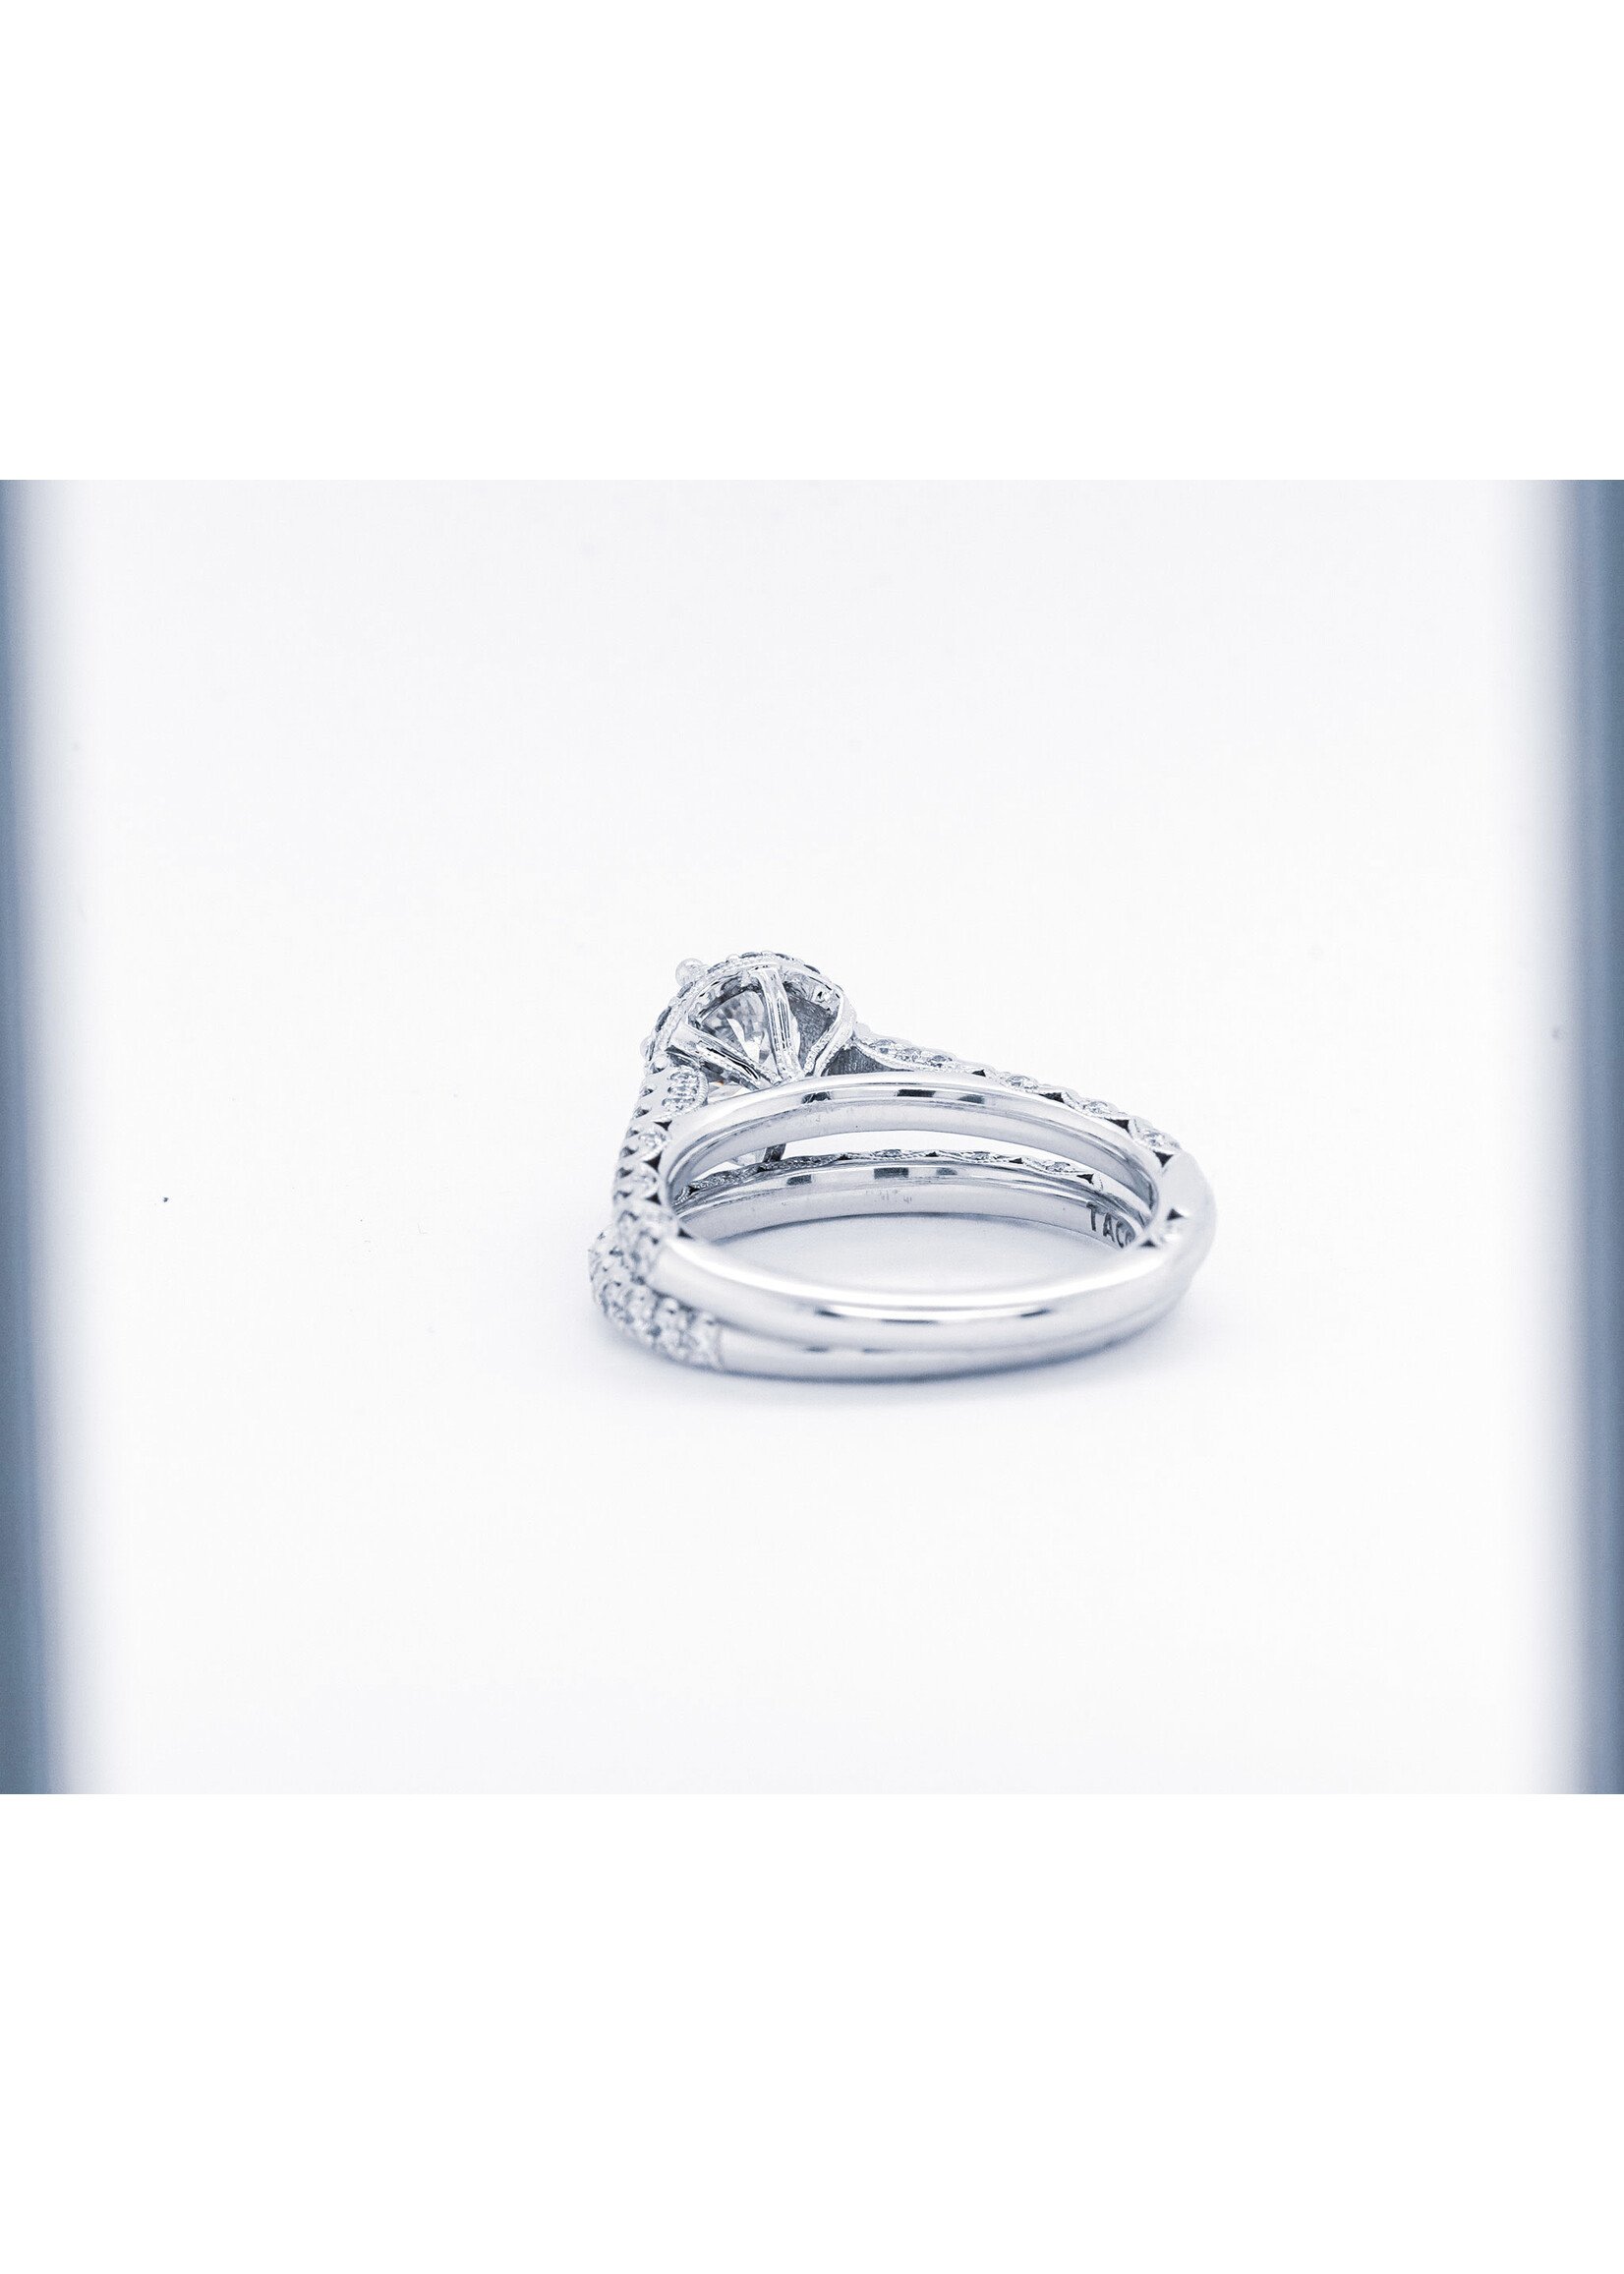 18KW 7g 1.80ctw (.74ctr) Tacori Engagement Ring (size 6)